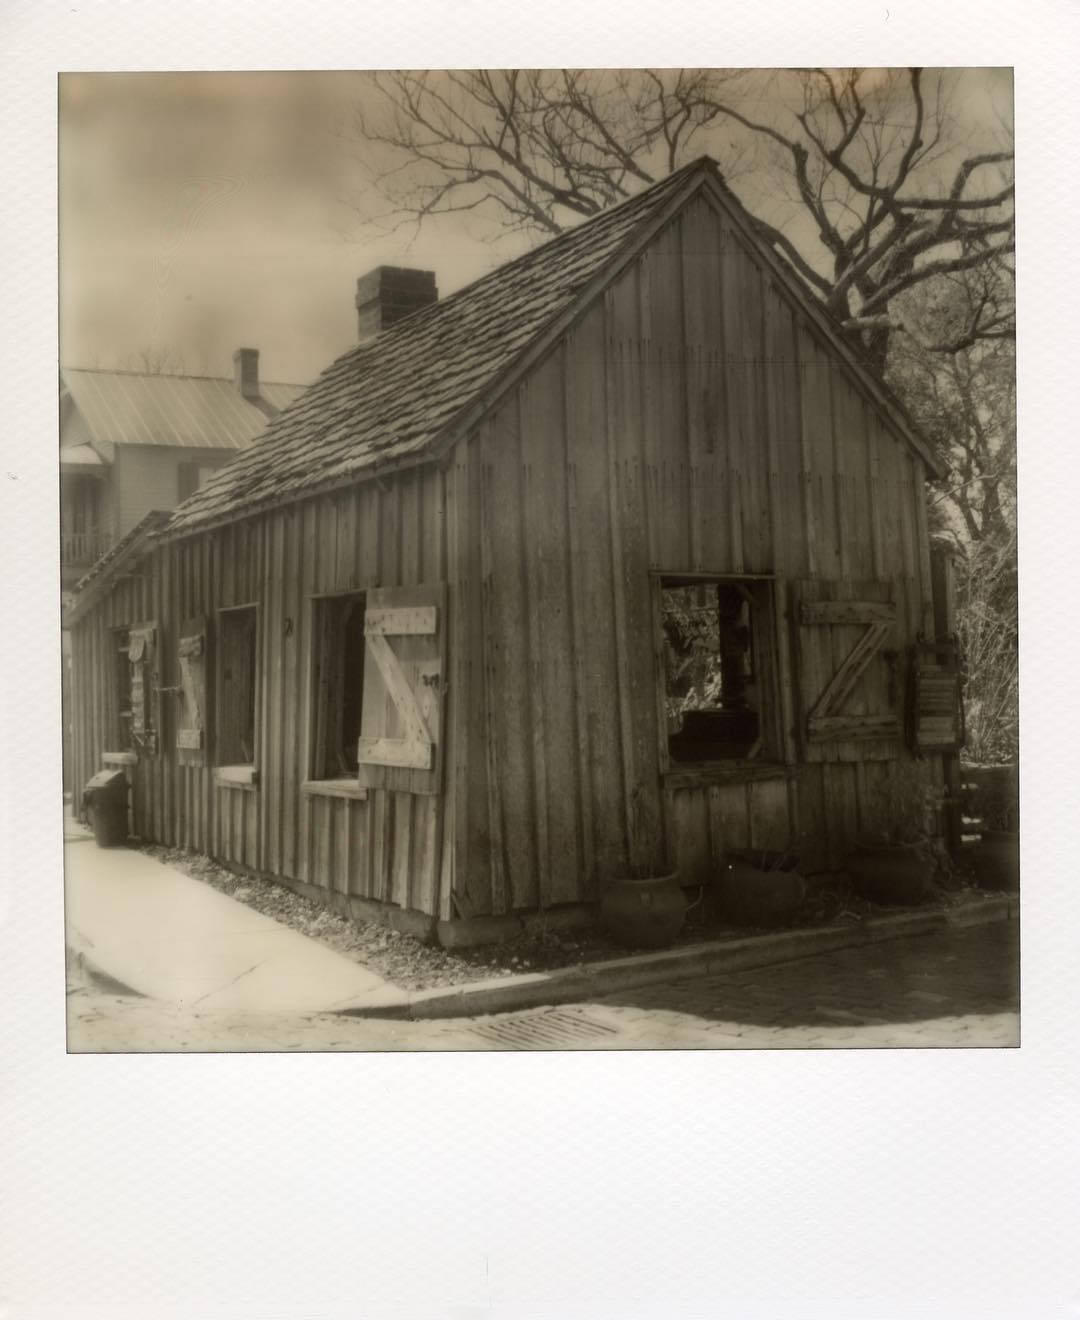 This is not a barn. #sx70 #polaroid #polaroidoriginals #blackandwhitesx70film #staugustine